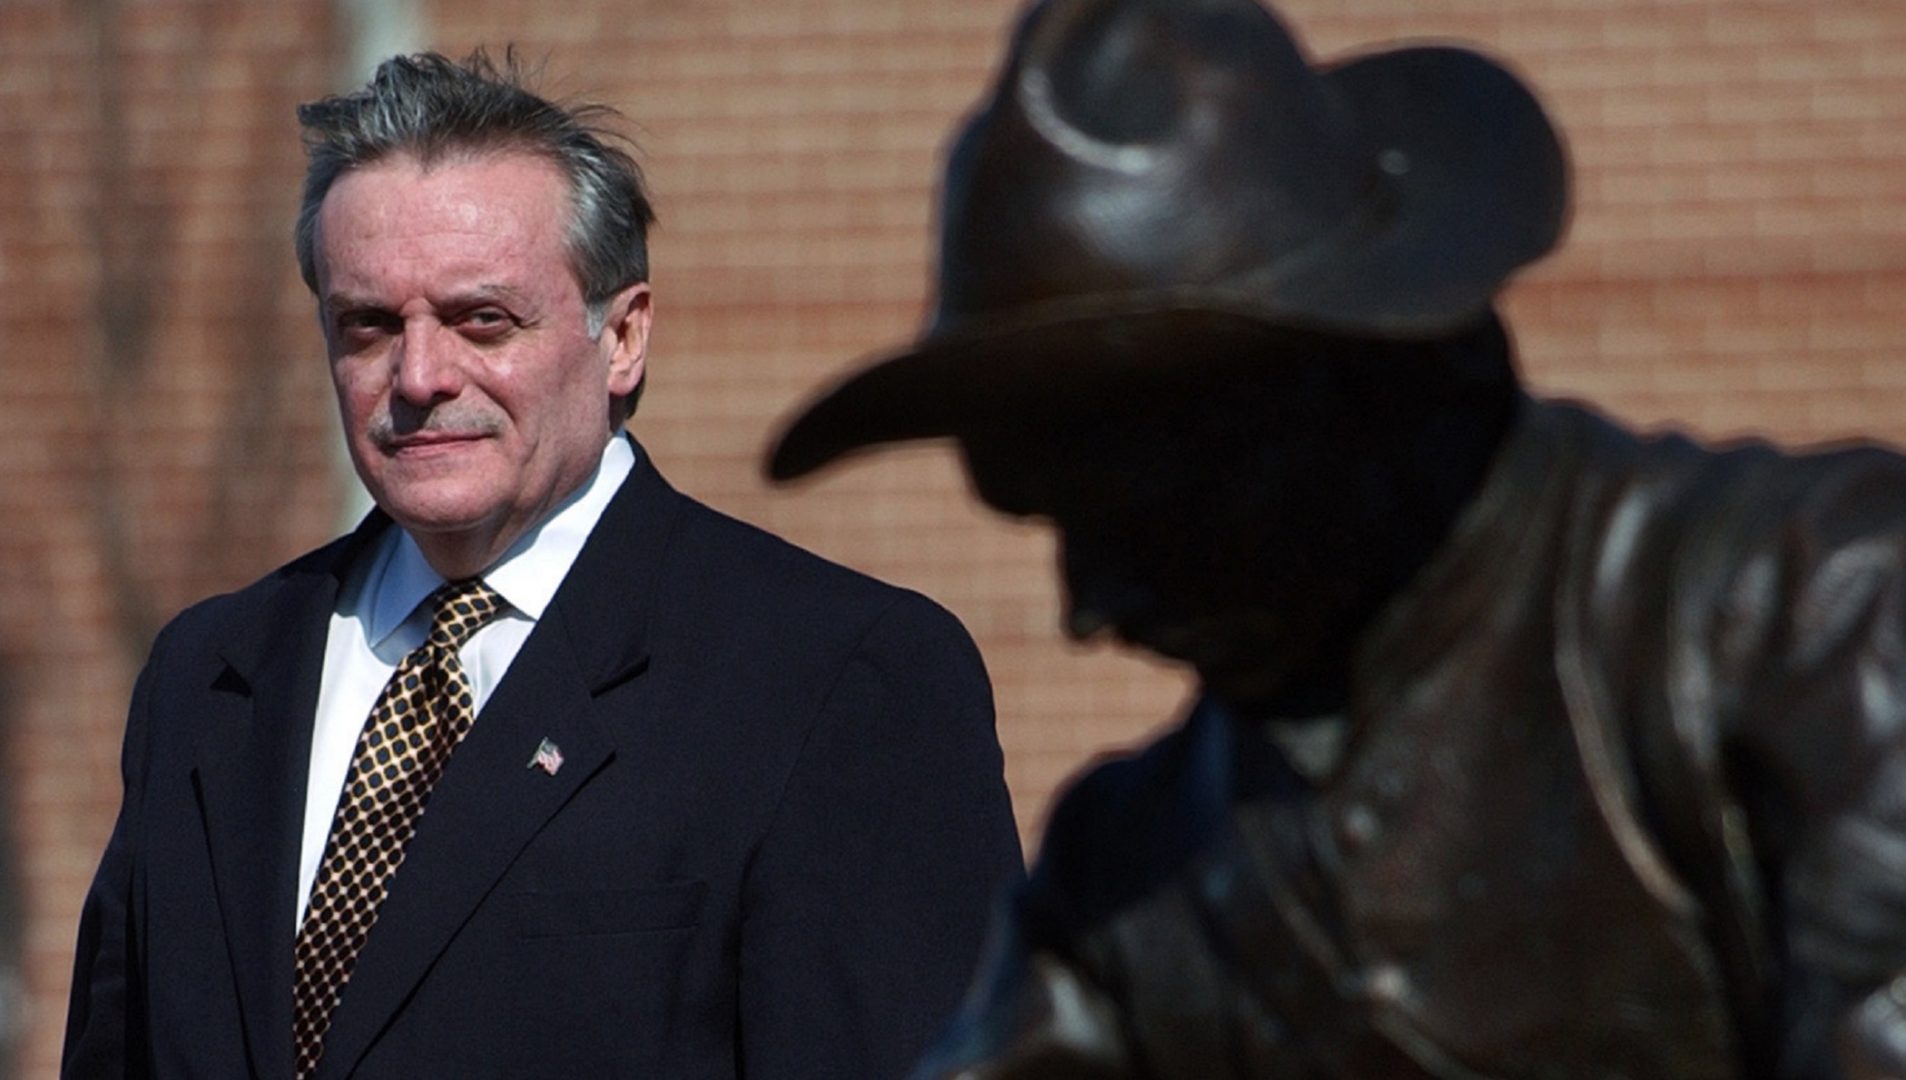 FILE PHOTO: Harrisburg Mayor Stephen Reed stands behind the bronze sculpture 